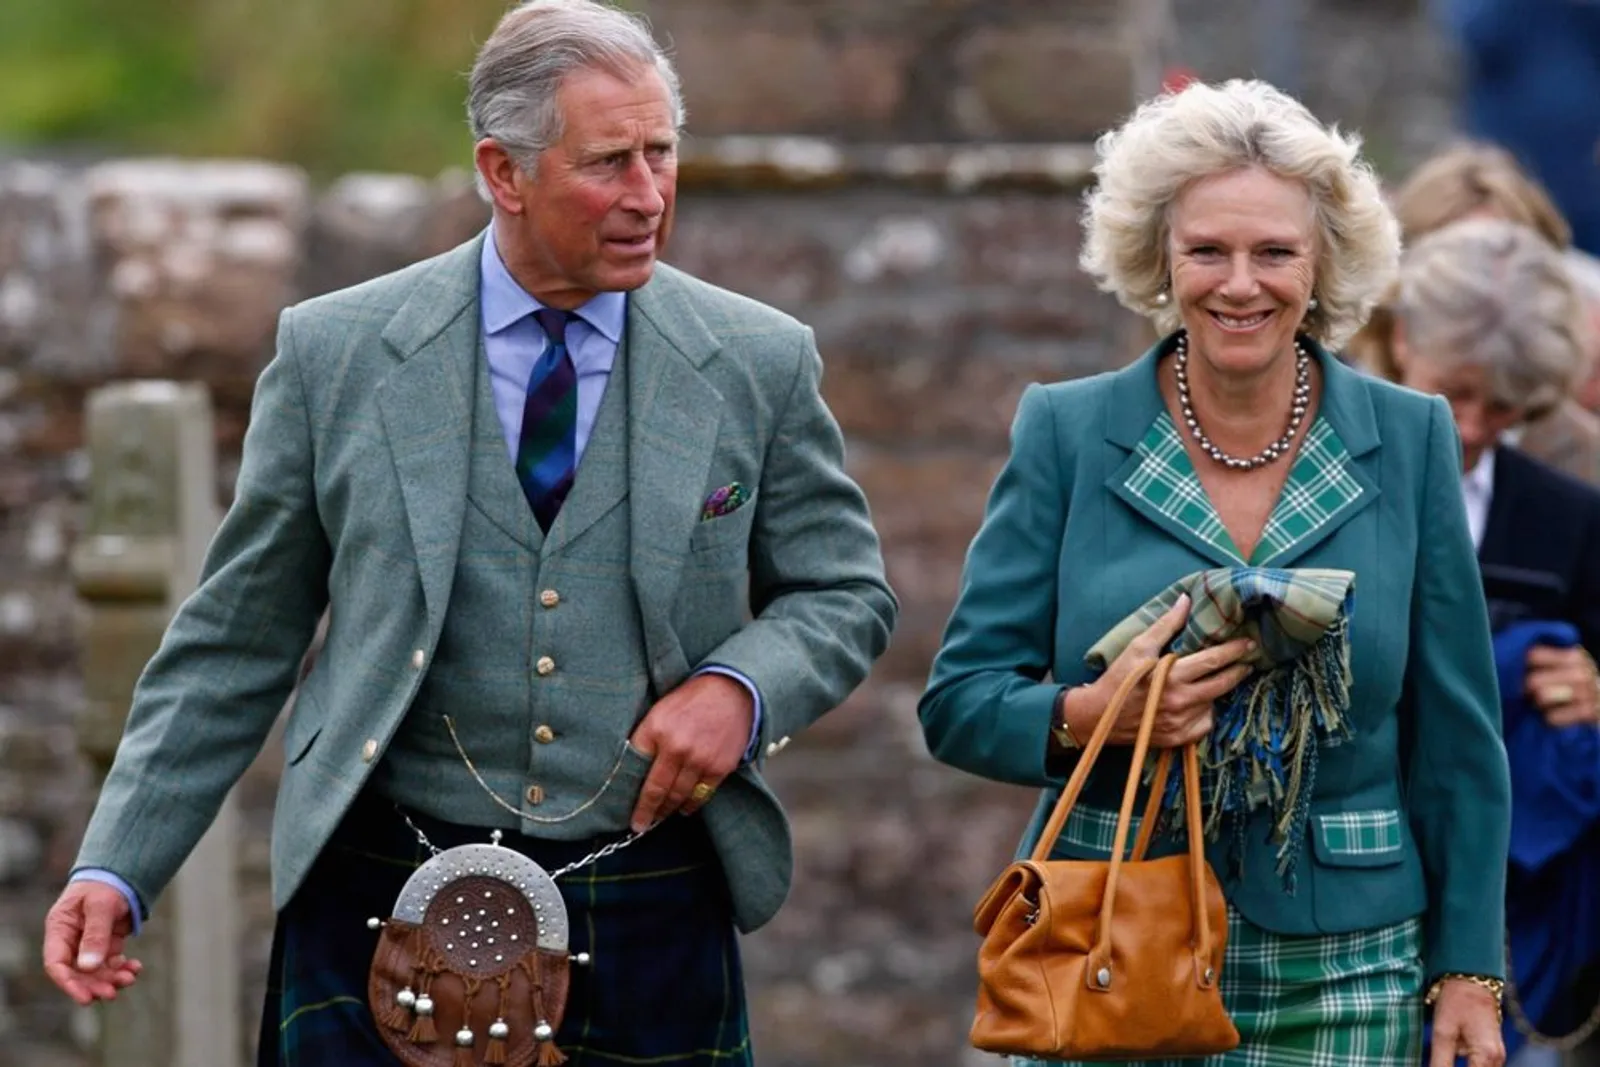 Terlibat Cinta Segitiga, Ini Kisah Pangeran Charles & Camilla Parker